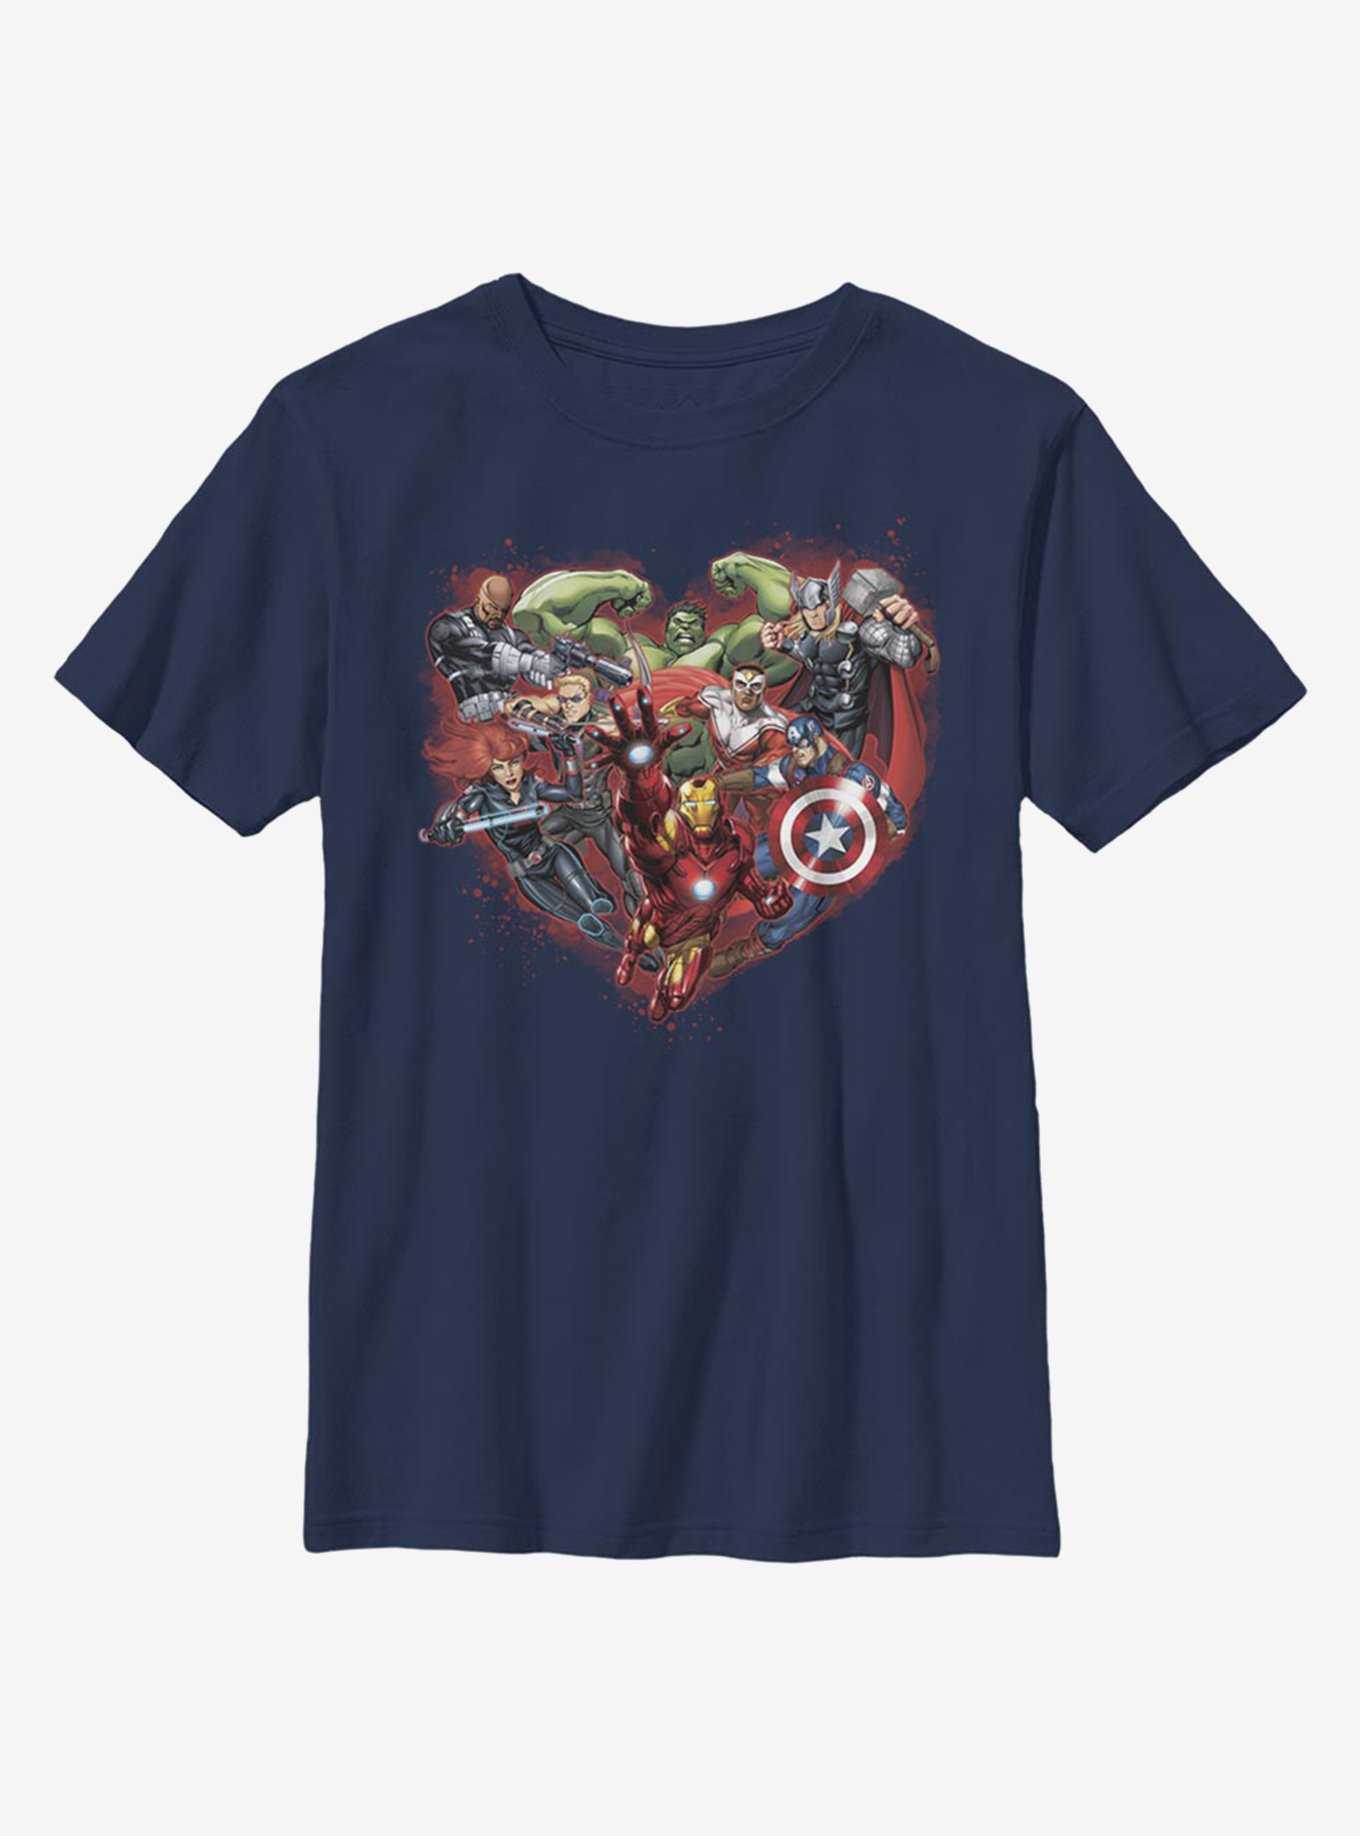 OFFICIAL Avengers Shirts & Merchandise Her | Universe